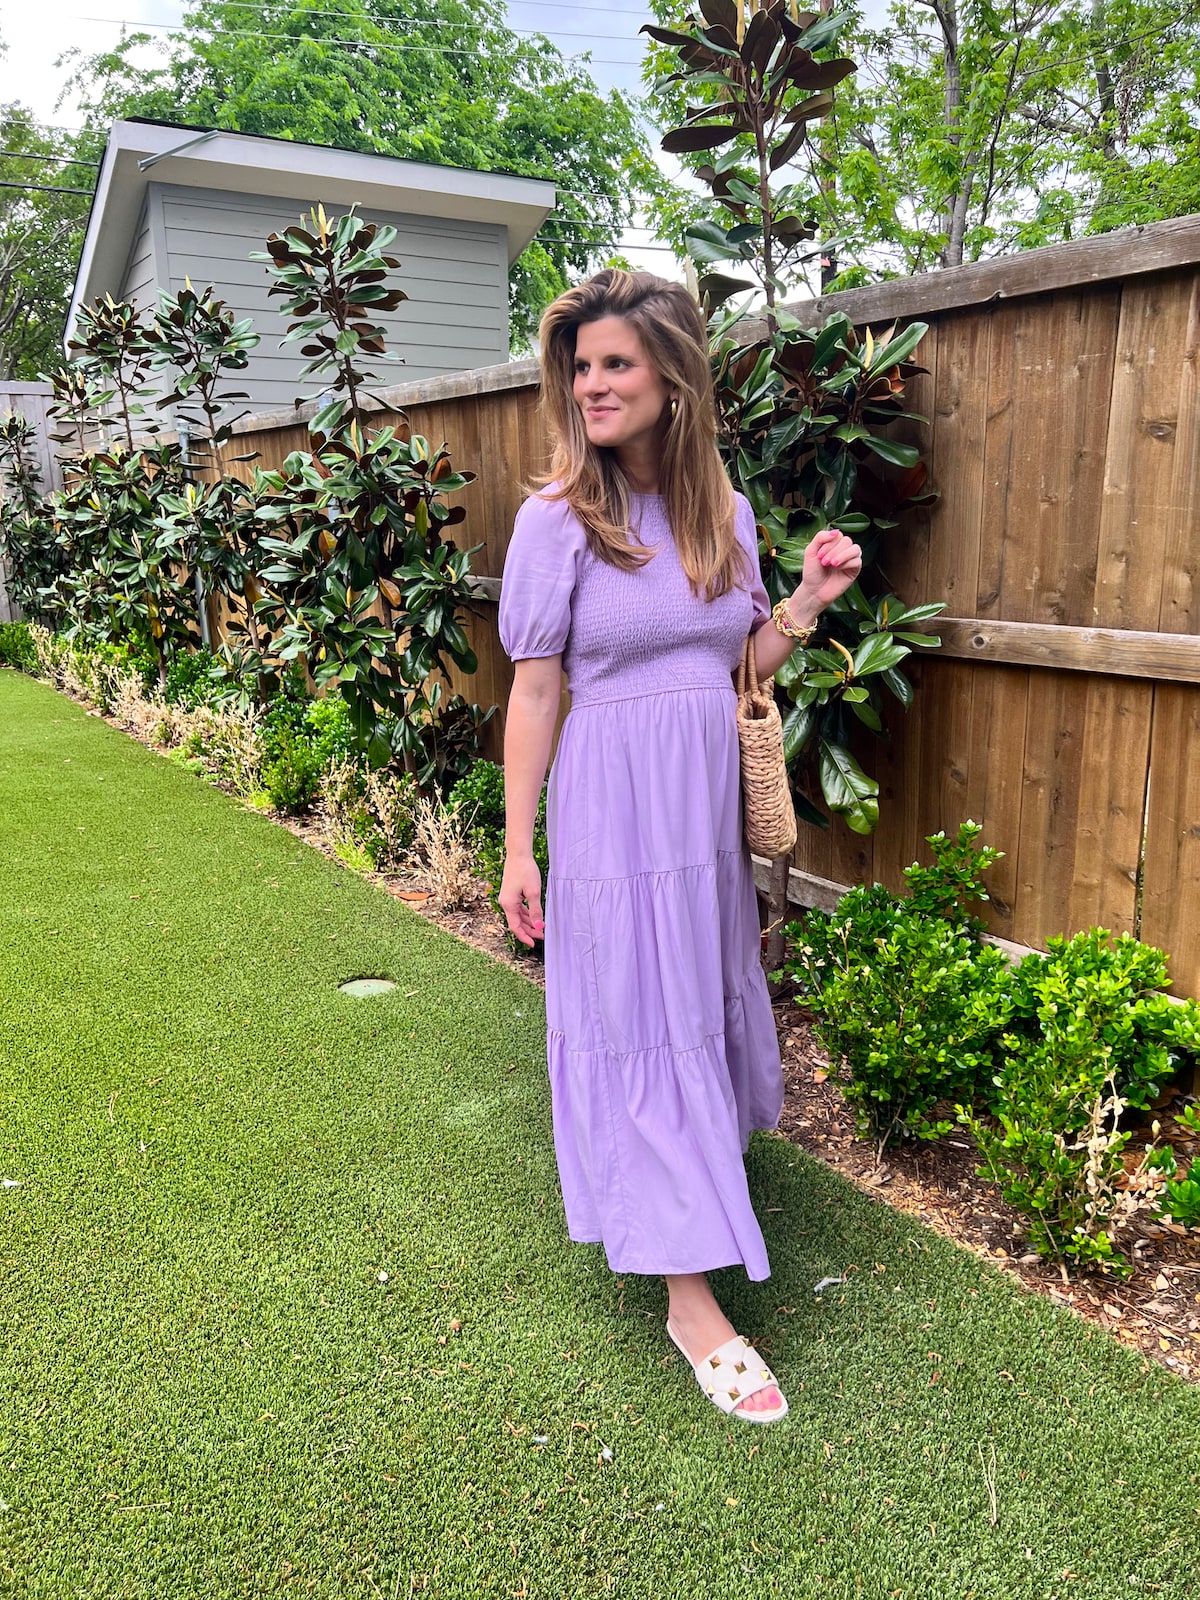 Brighton Butler wearing Amazon purple smock dress summer comfort